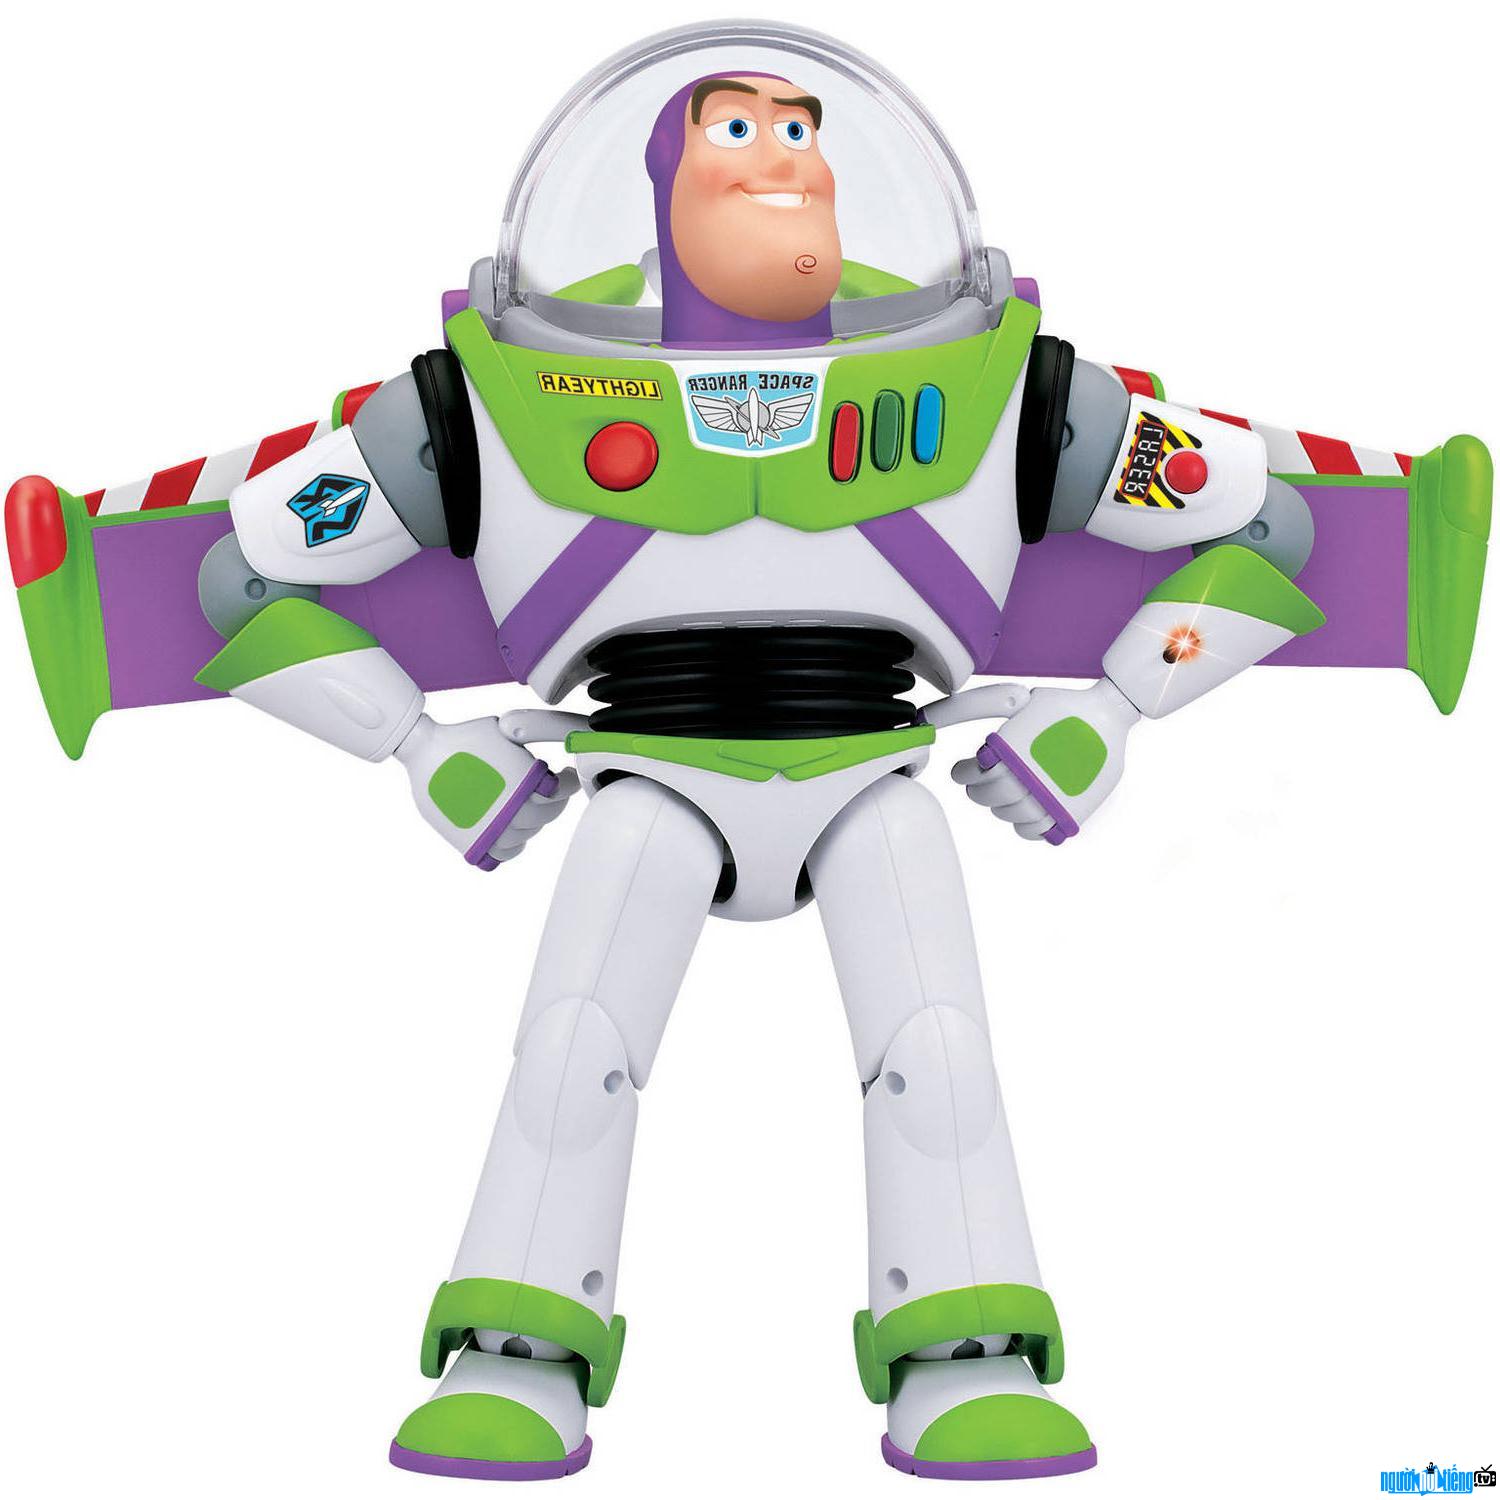 Buzz Lightyear character image